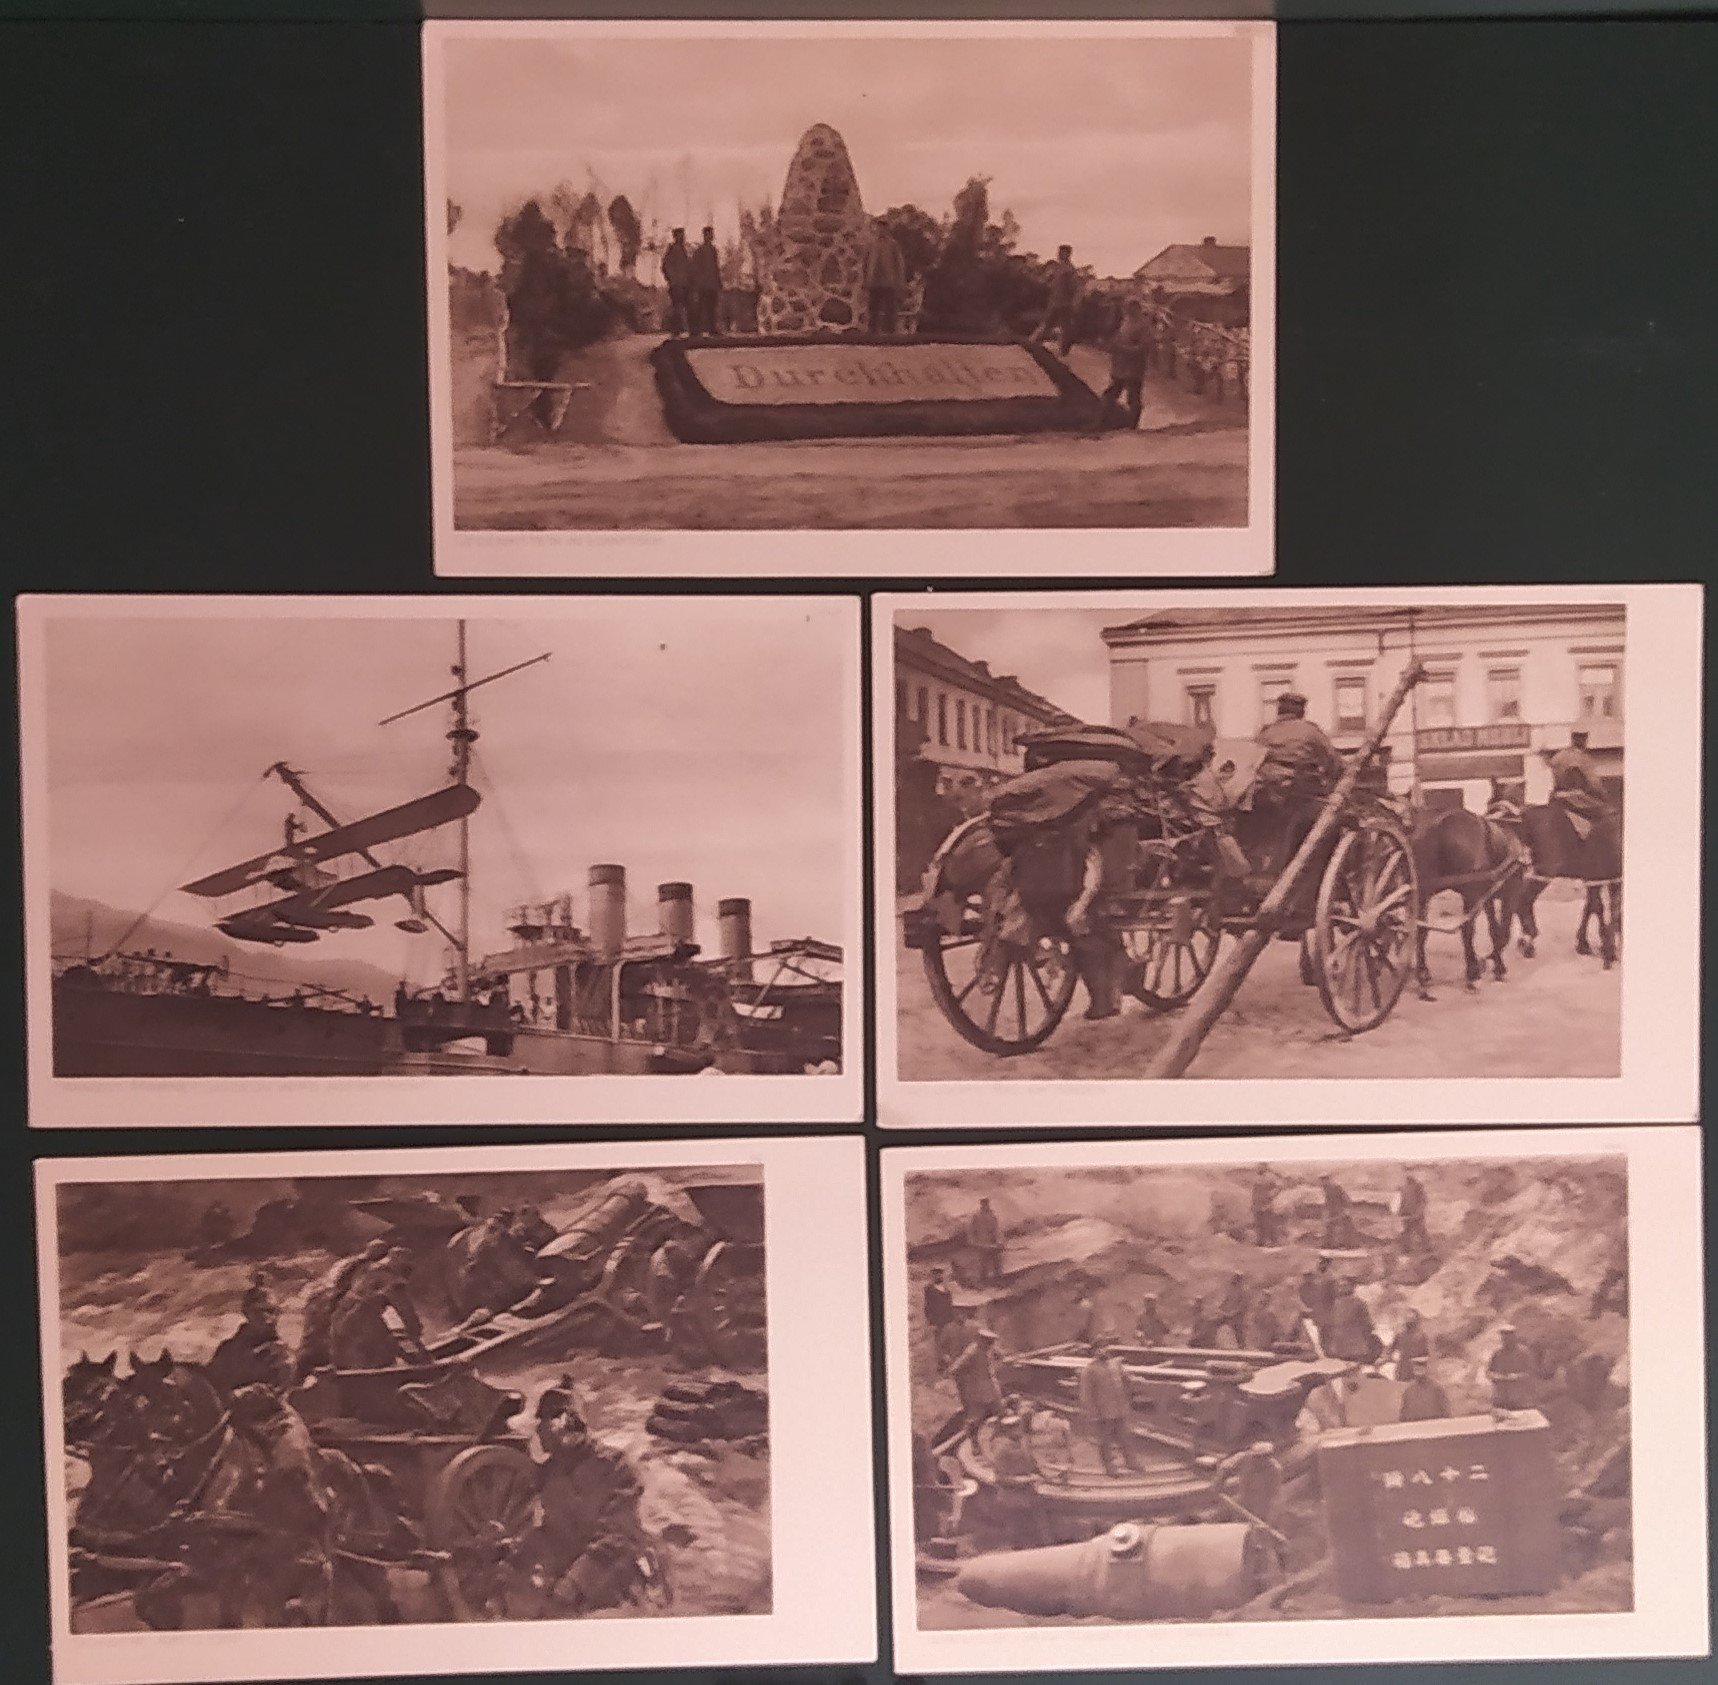 Der Krieg 1914/16 in Postkarten (HKK CC BY-NC-SA)